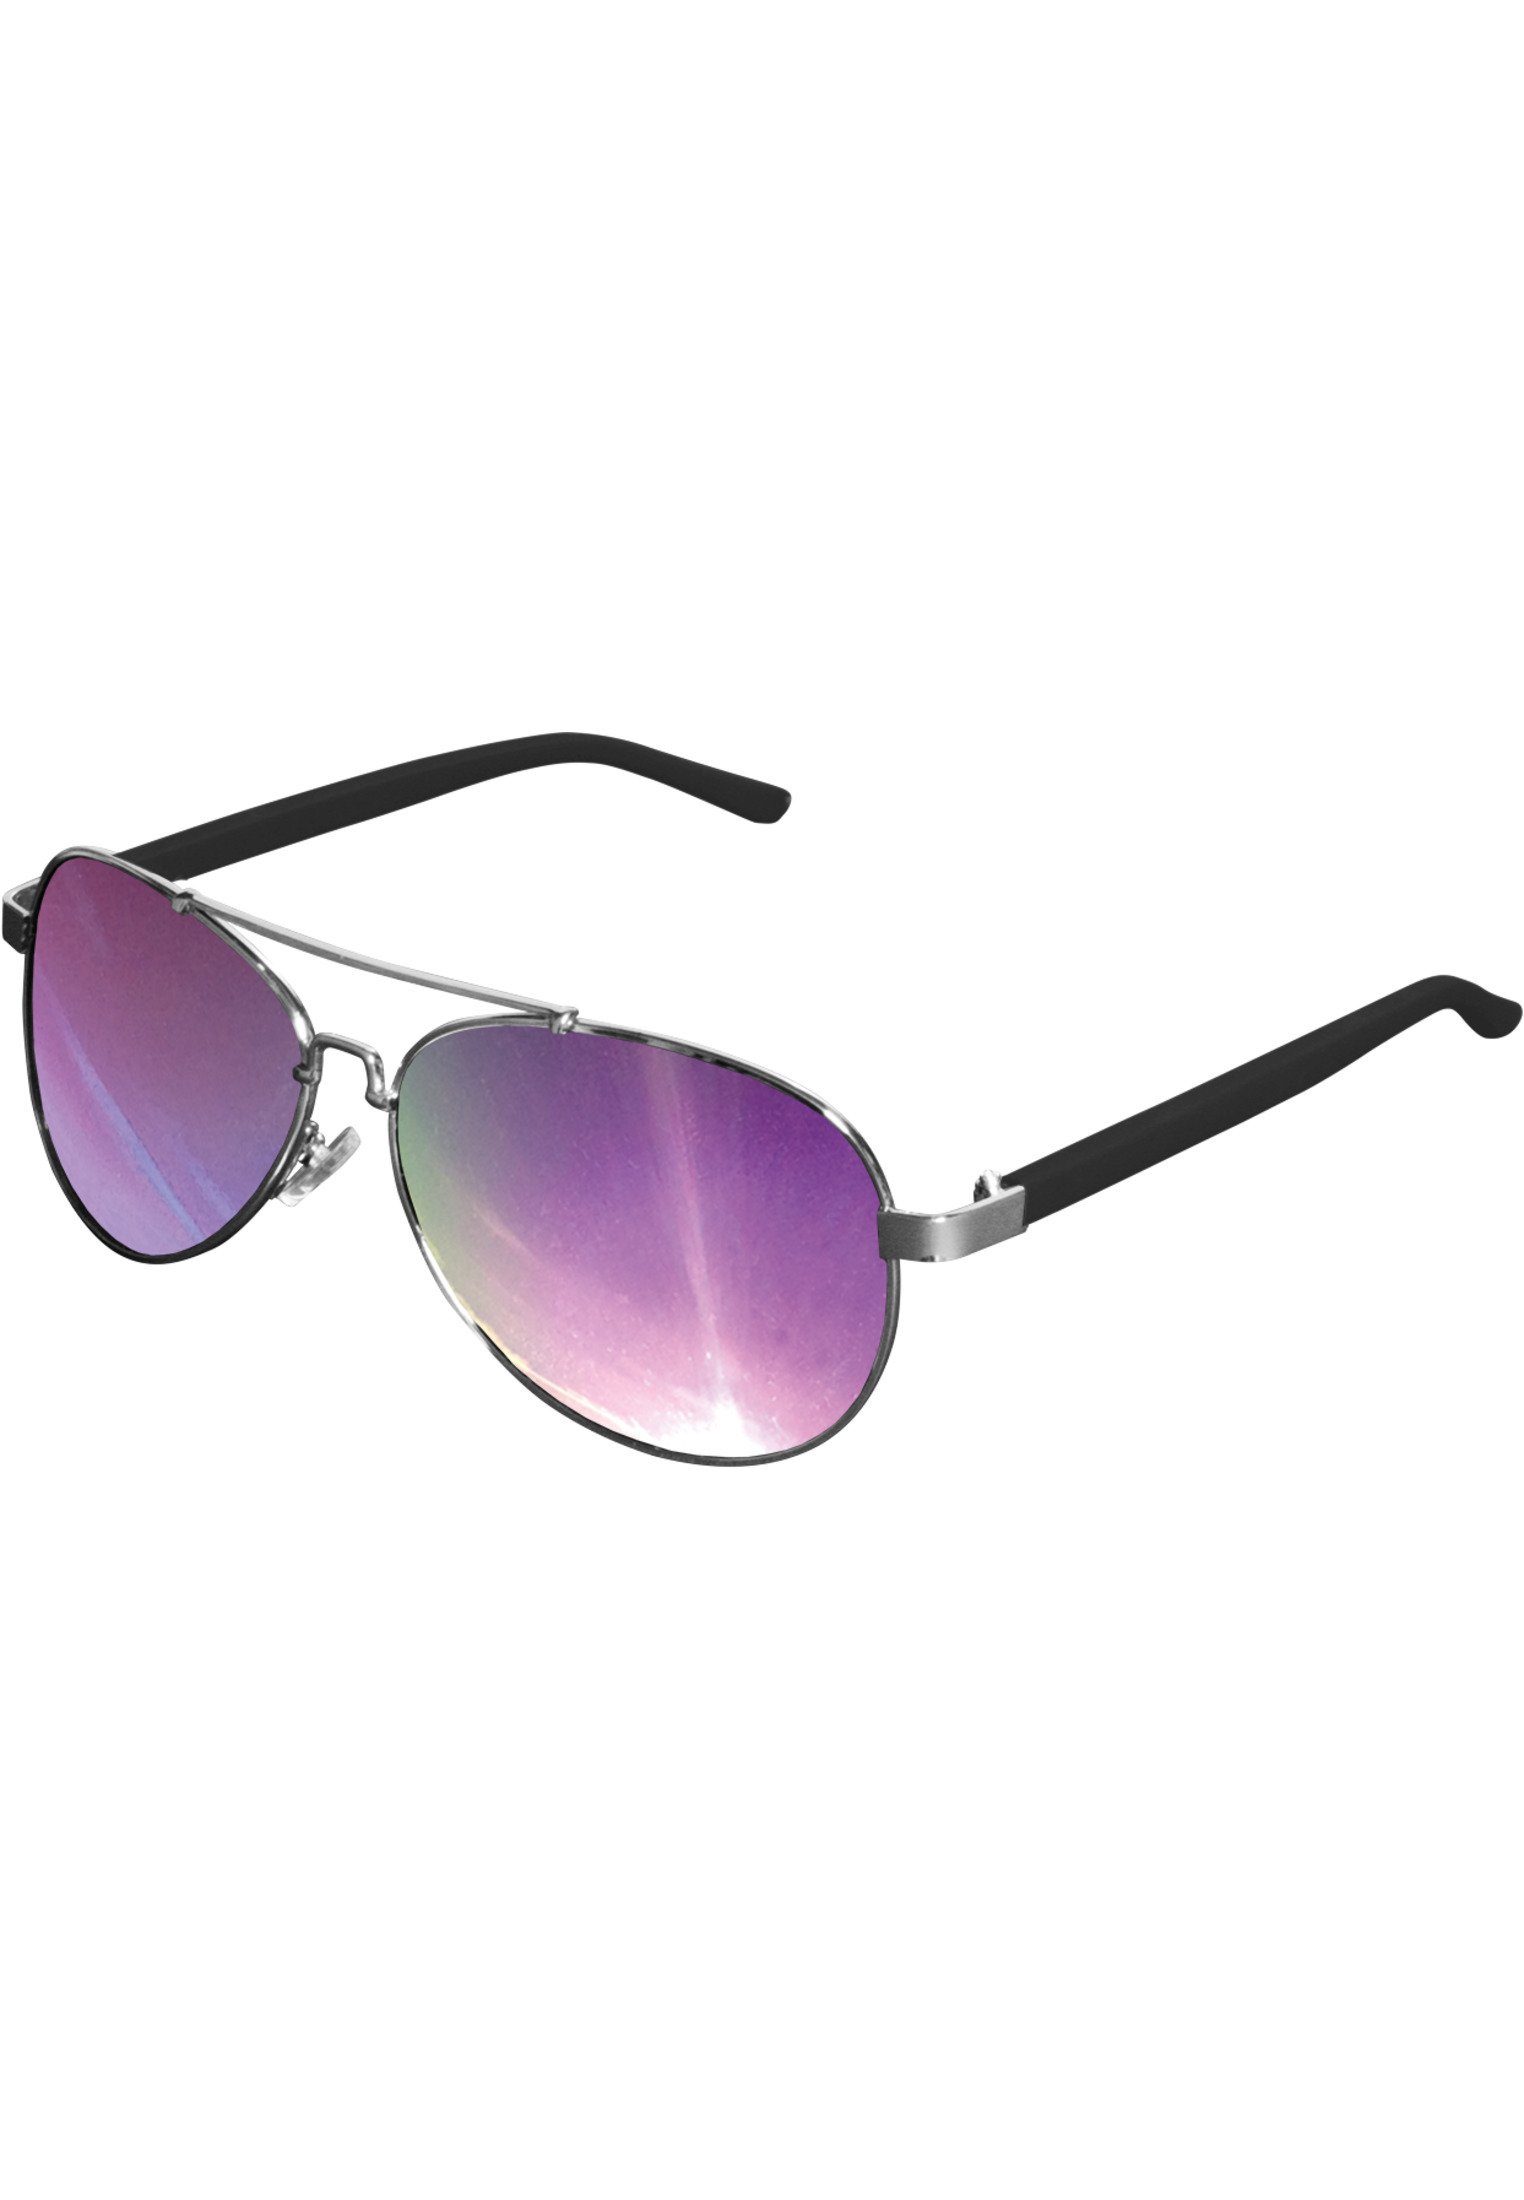 silver/purple Sunglasses Sonnenbrille Accessoires Mumbo MSTRDS Mirror